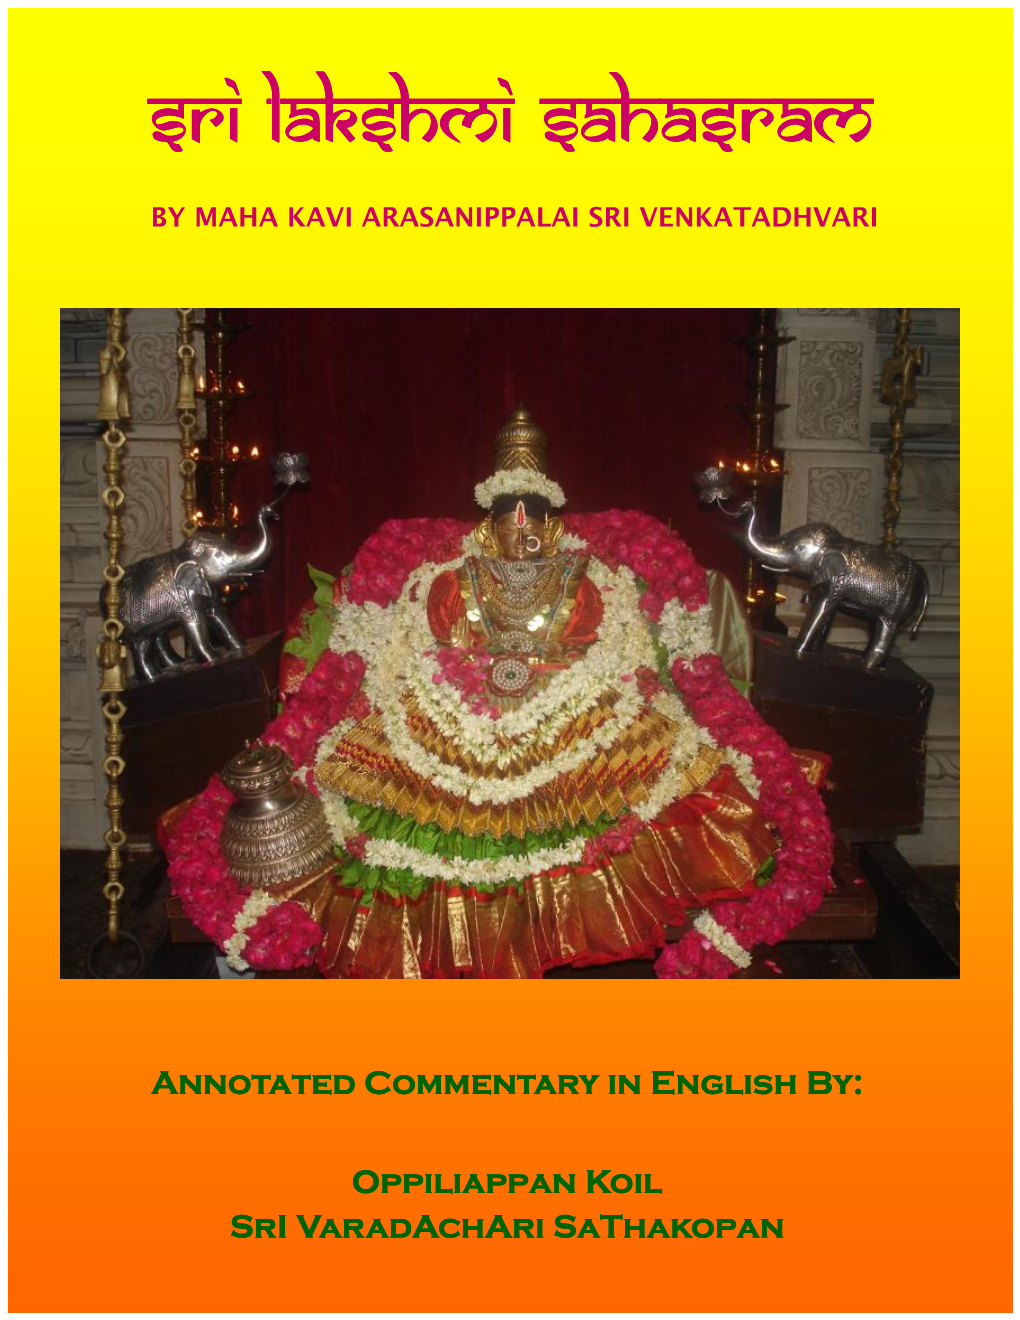 4. Nama Vaibhava Stabakam